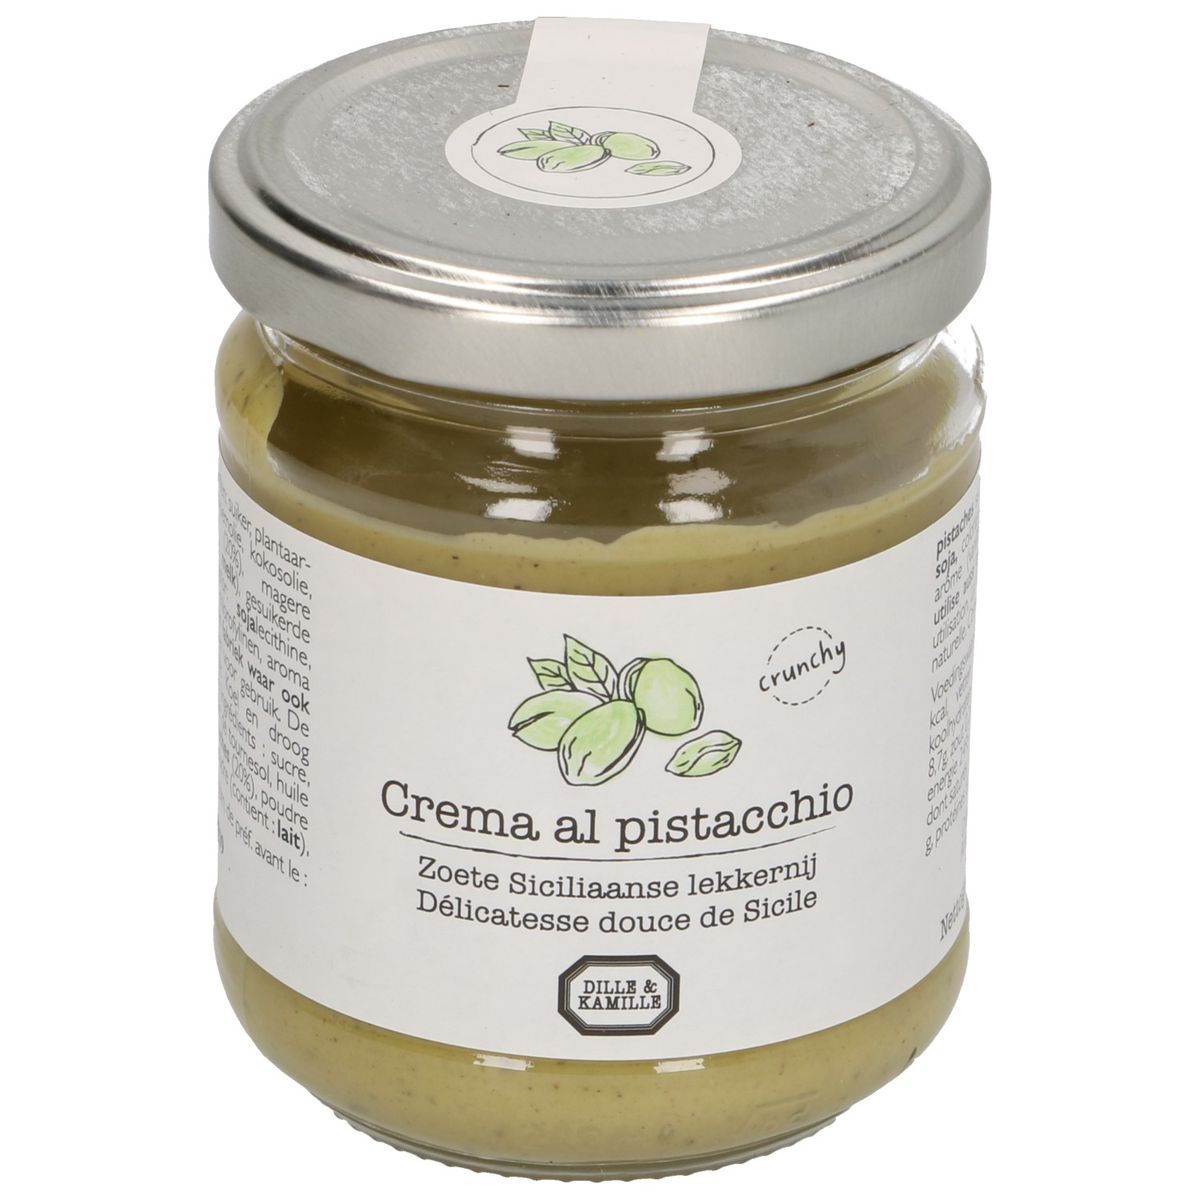 Al Pistacchi, crème de pistache - Al dente la salsa